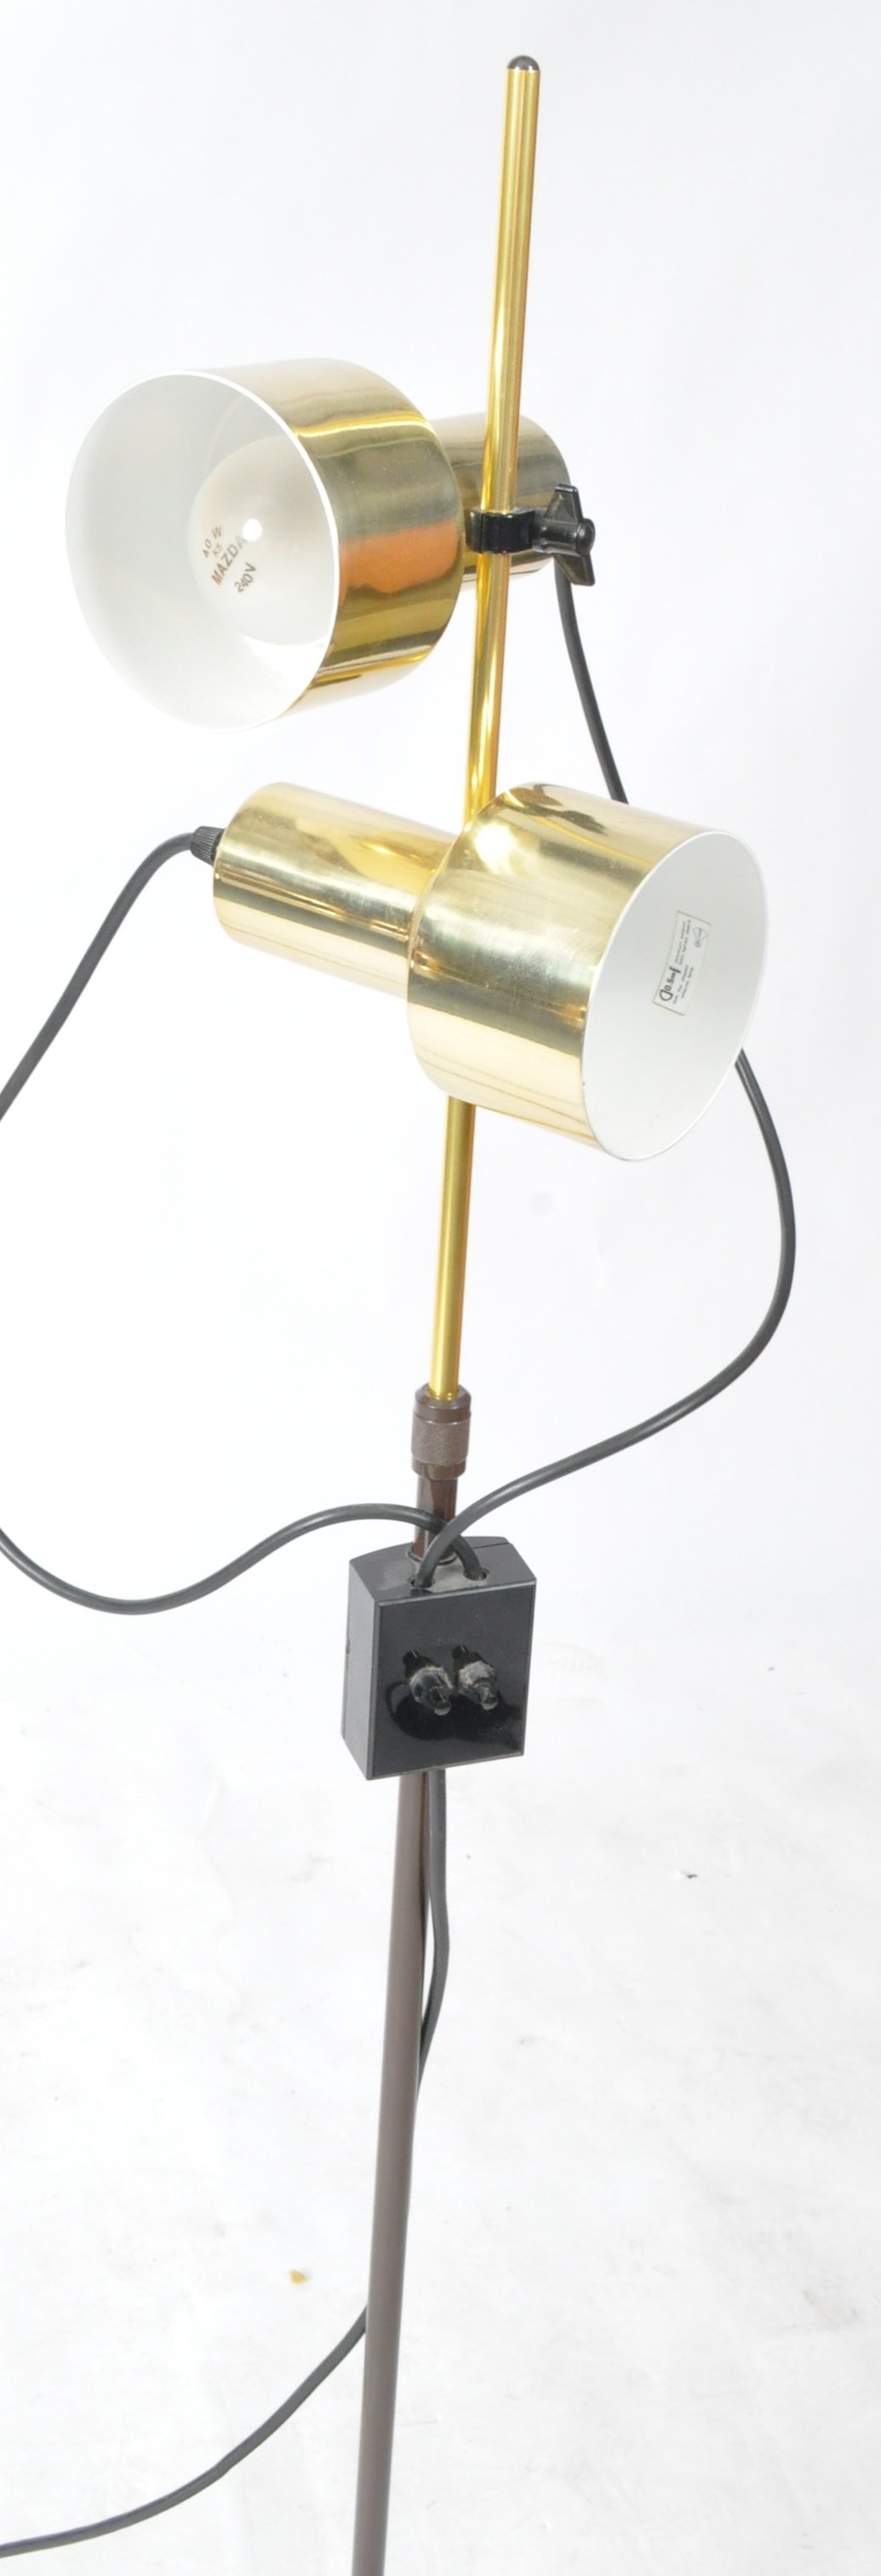 MID CENTURY ADJUSTABLE TWIN LIGHT FLOOR STANDING LAMP - Image 6 of 7